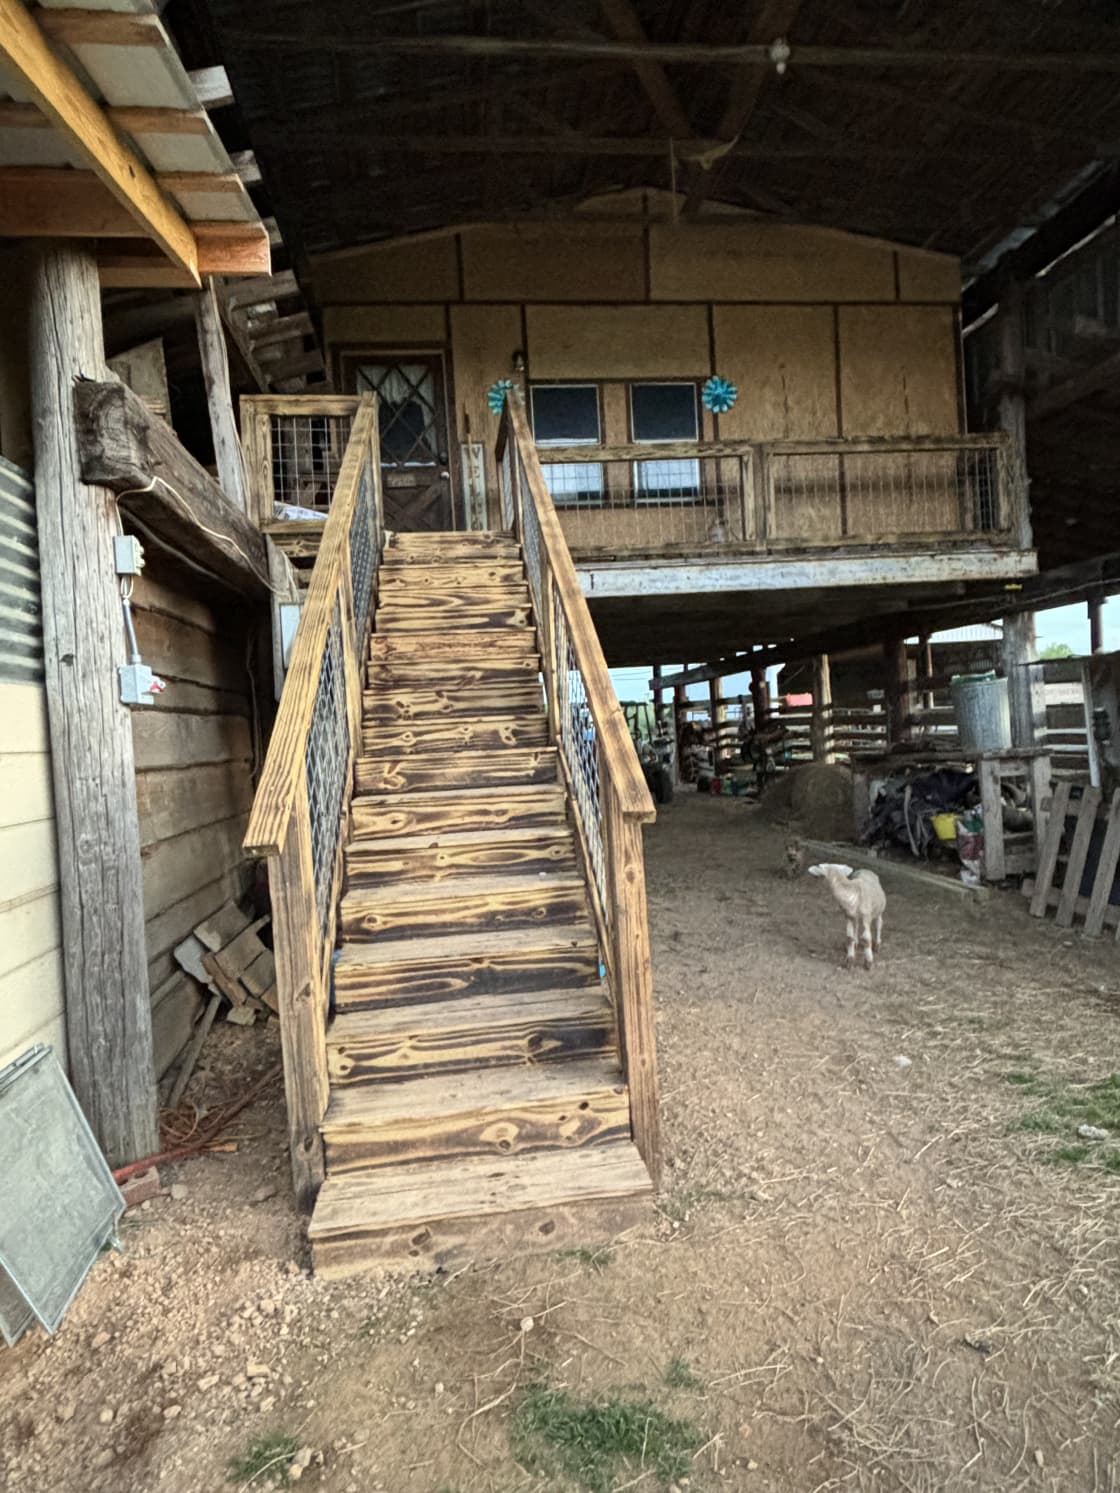 The Barn Loft